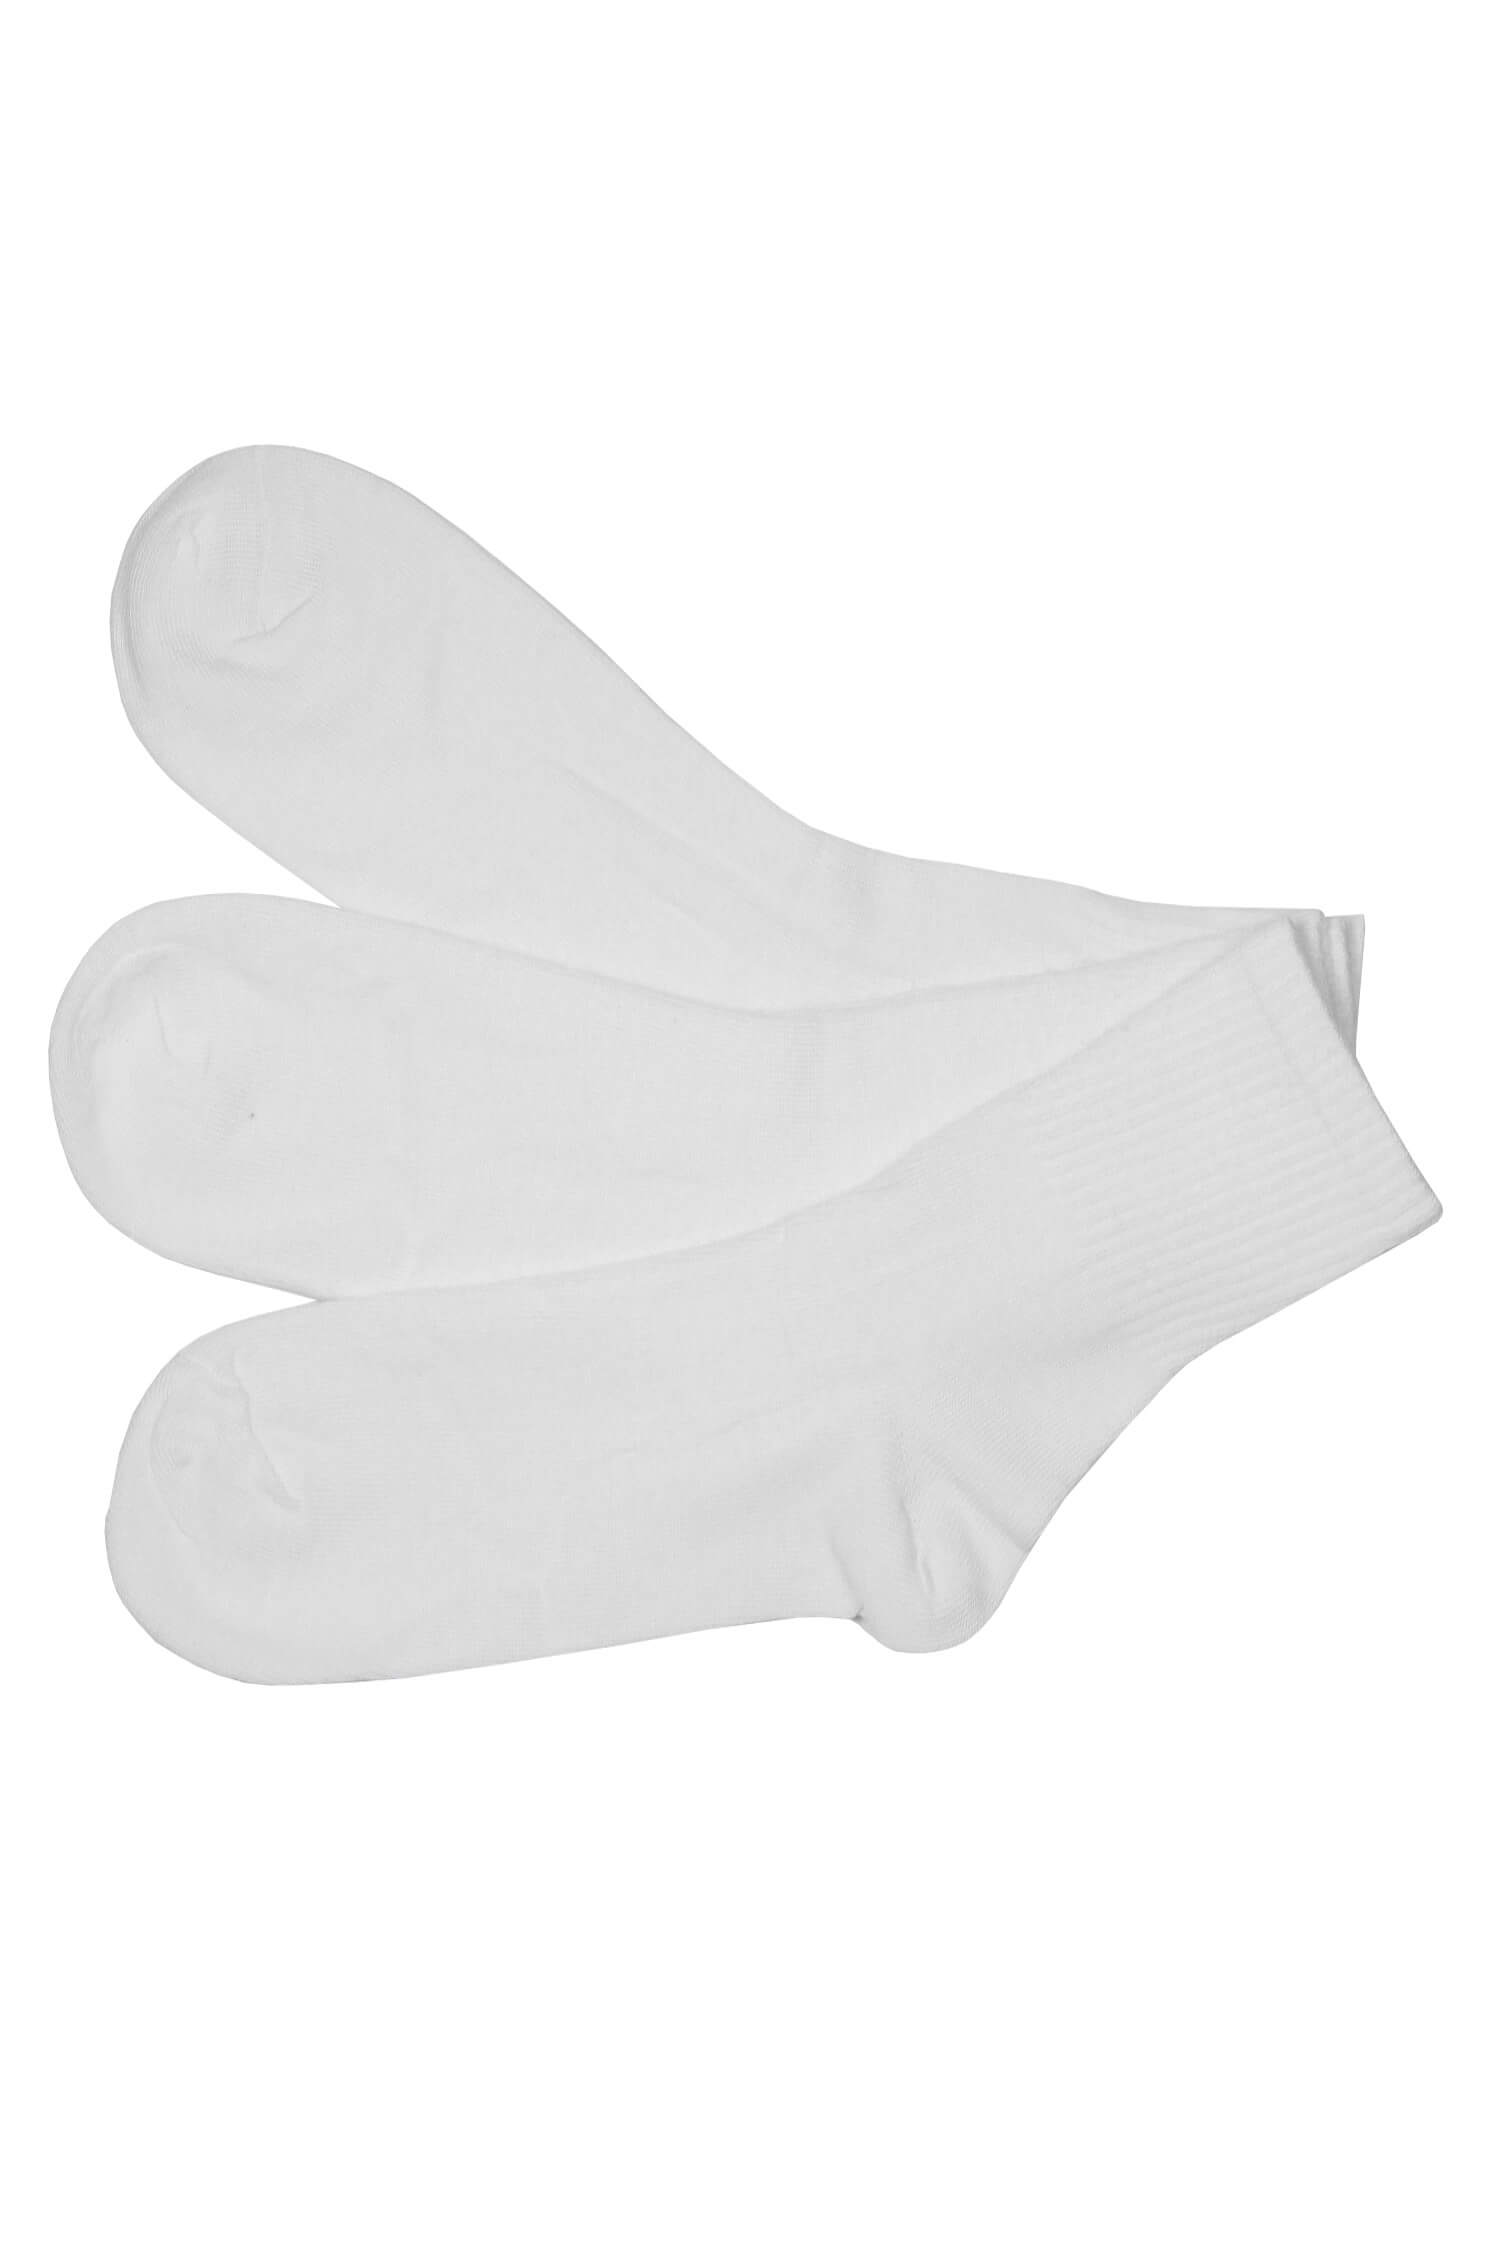 Pánské vysoké ponožky bavlna ZM-301A - 3bal 40-43 bílá